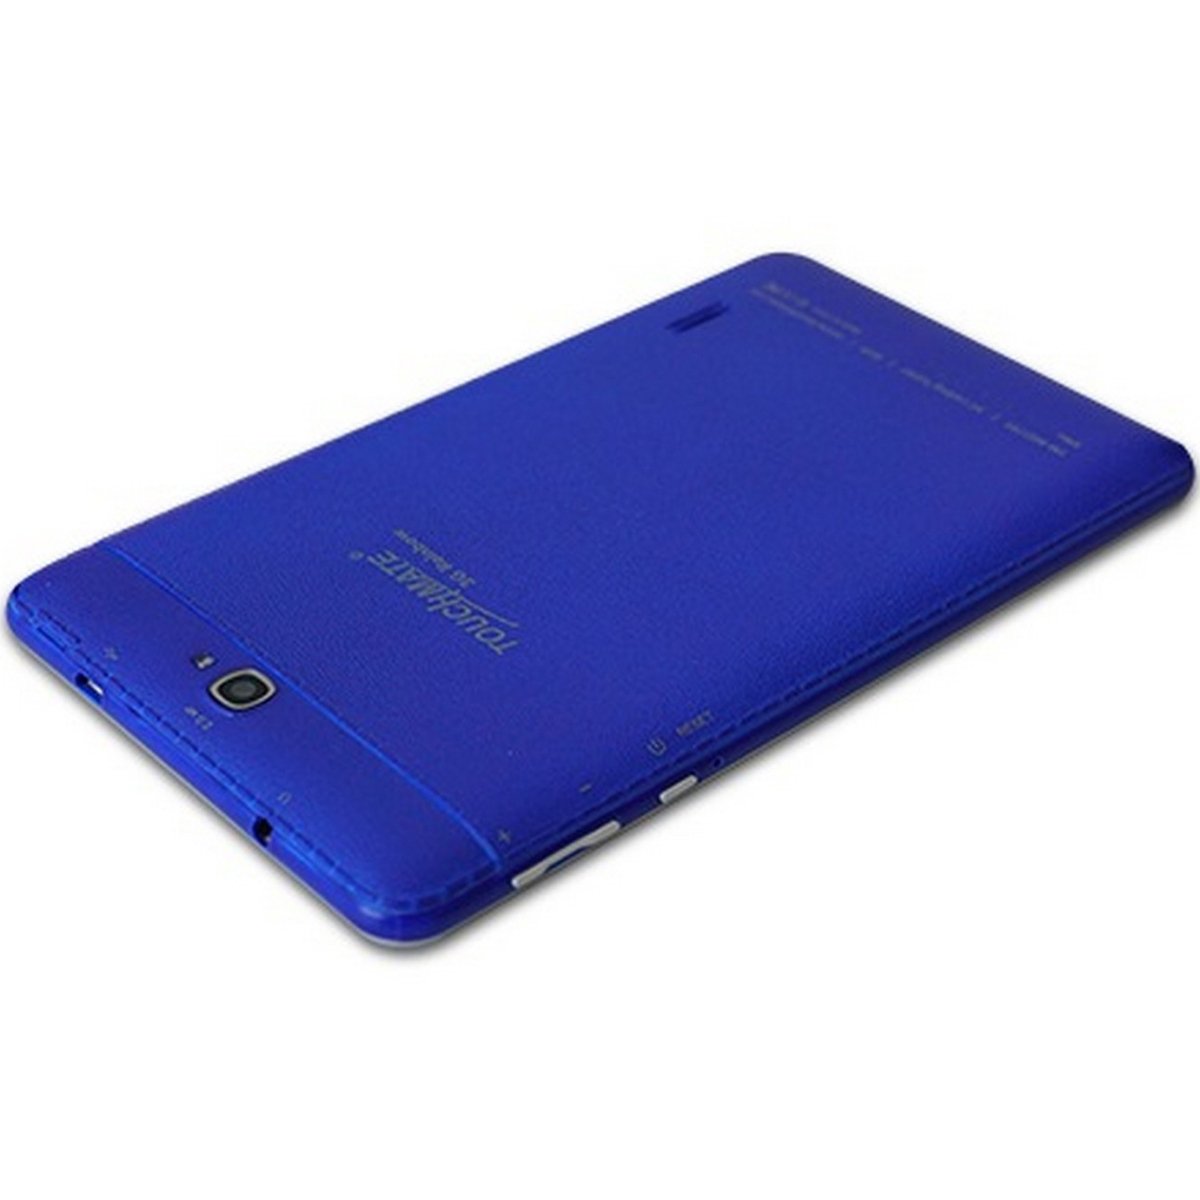 Touchmate Tab MID795 7.0inch 8GB 3G Blue